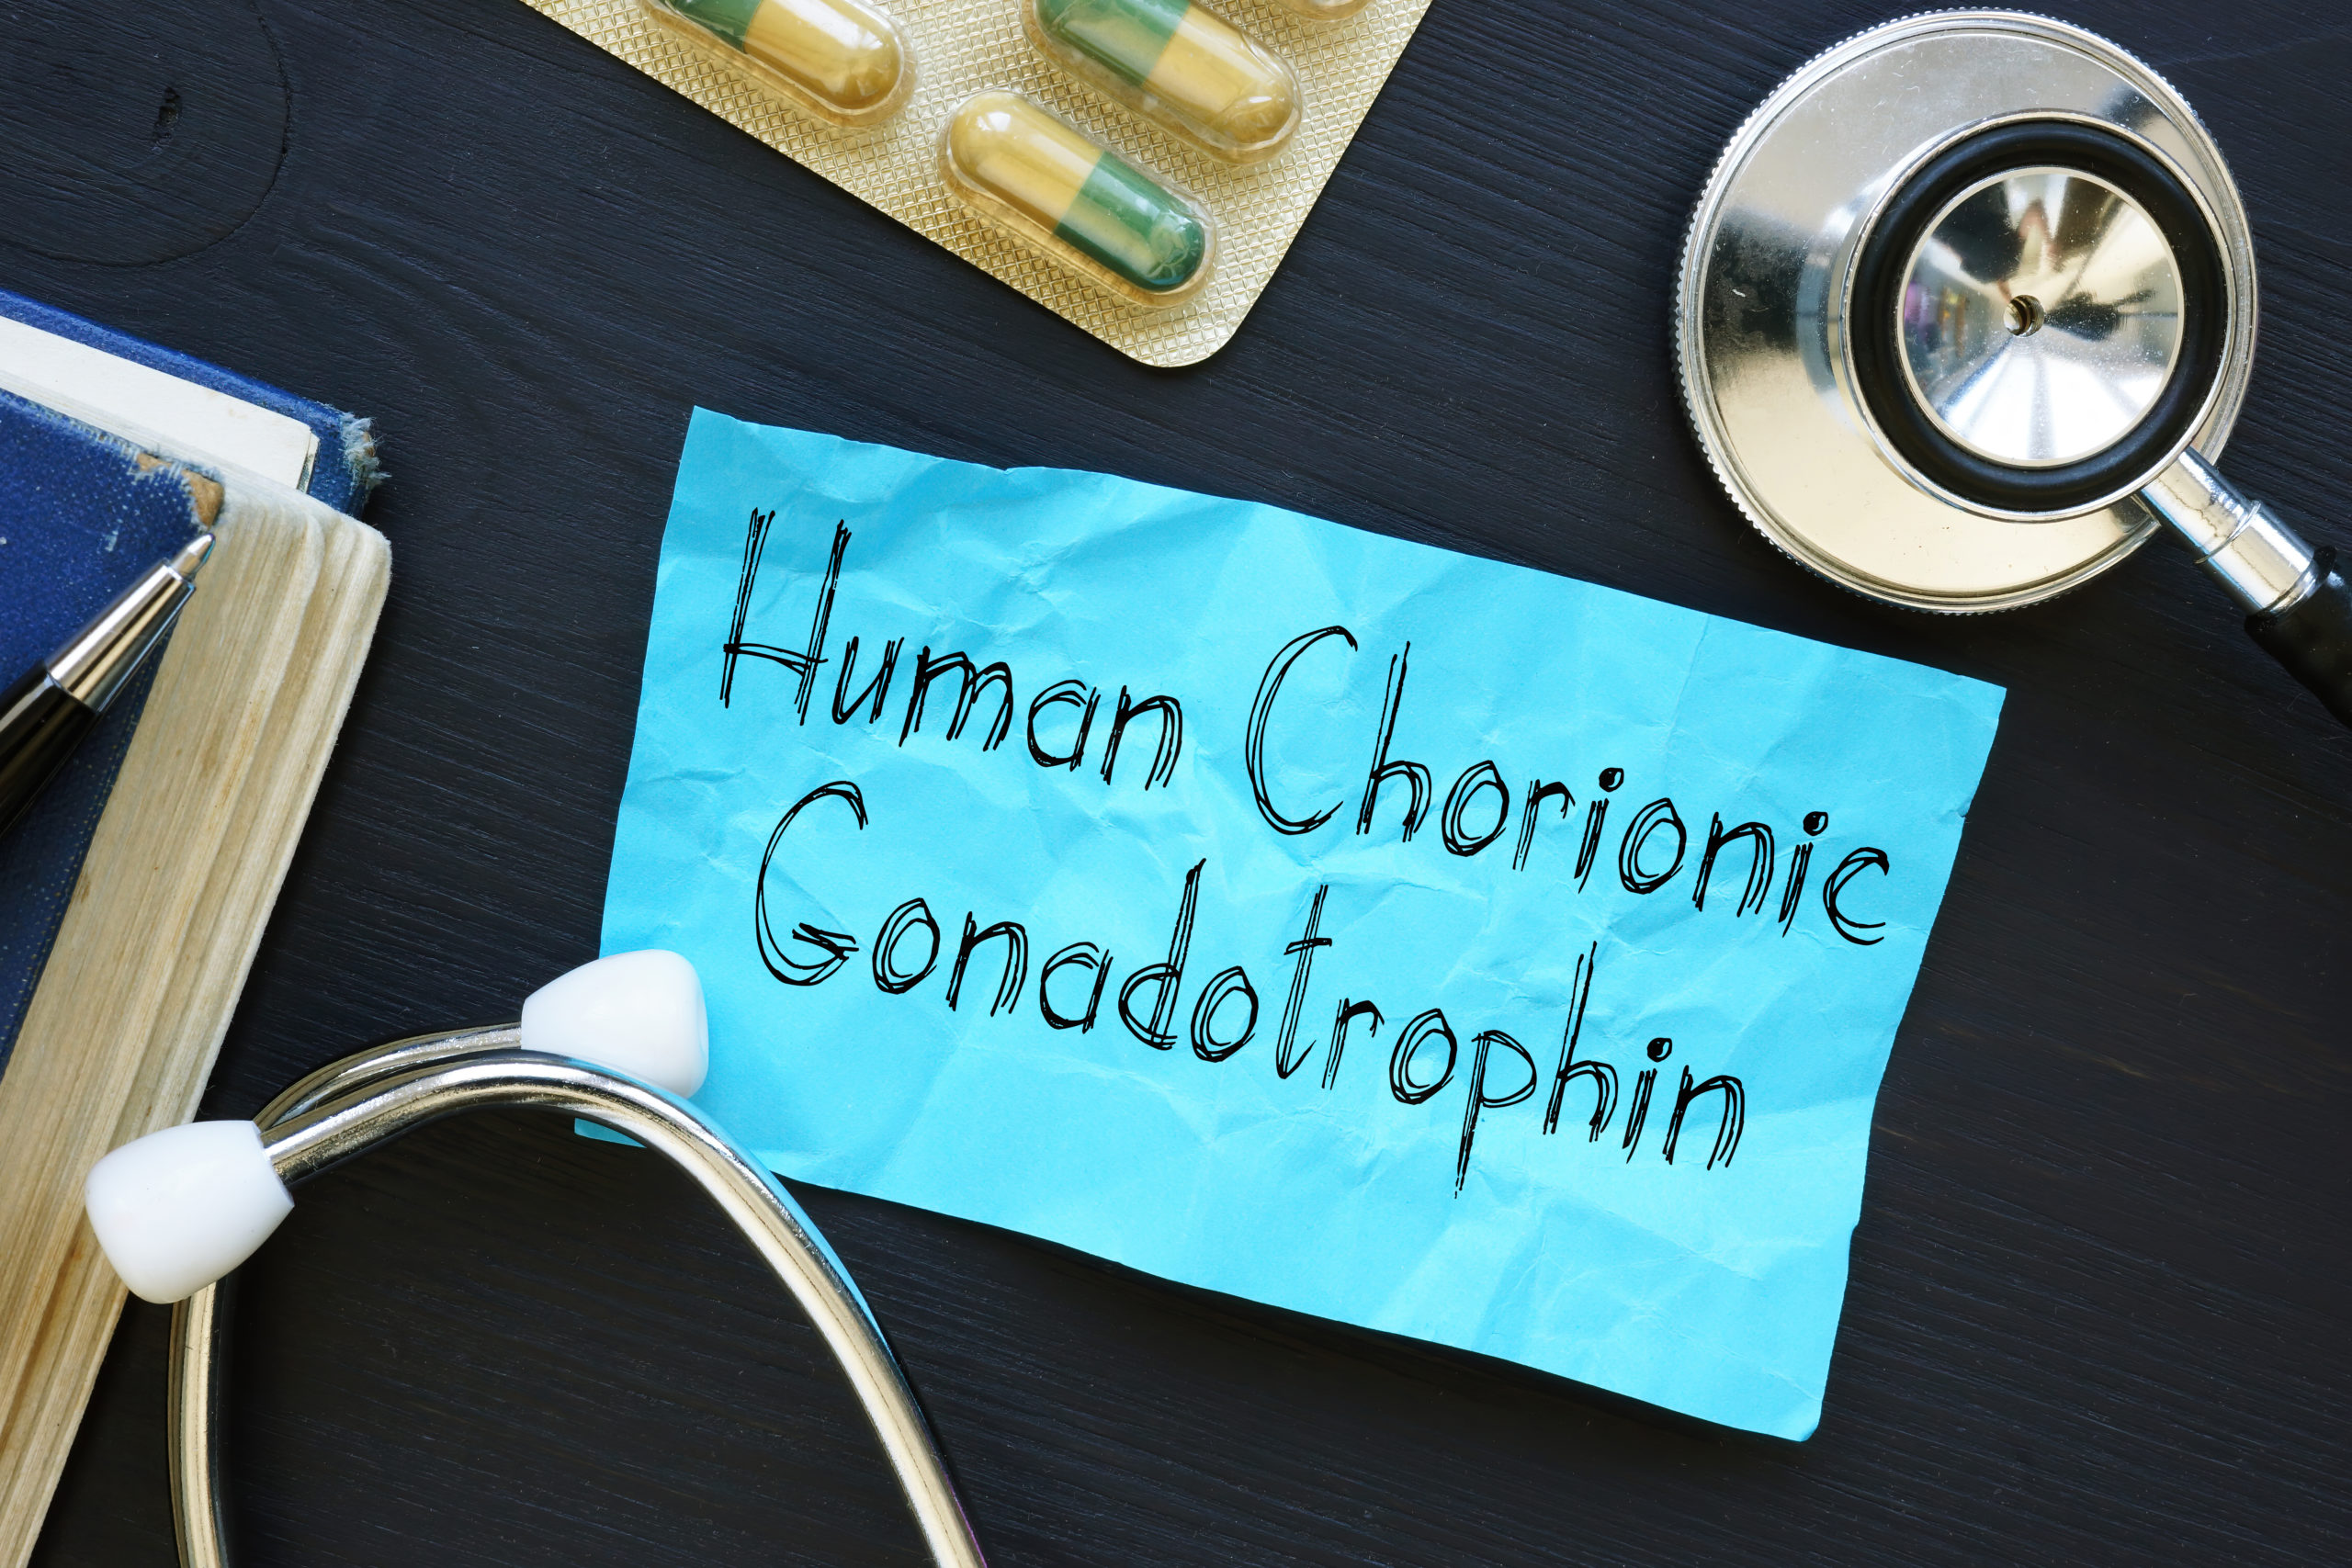 HCG Human Chorionic Gonadotrophin